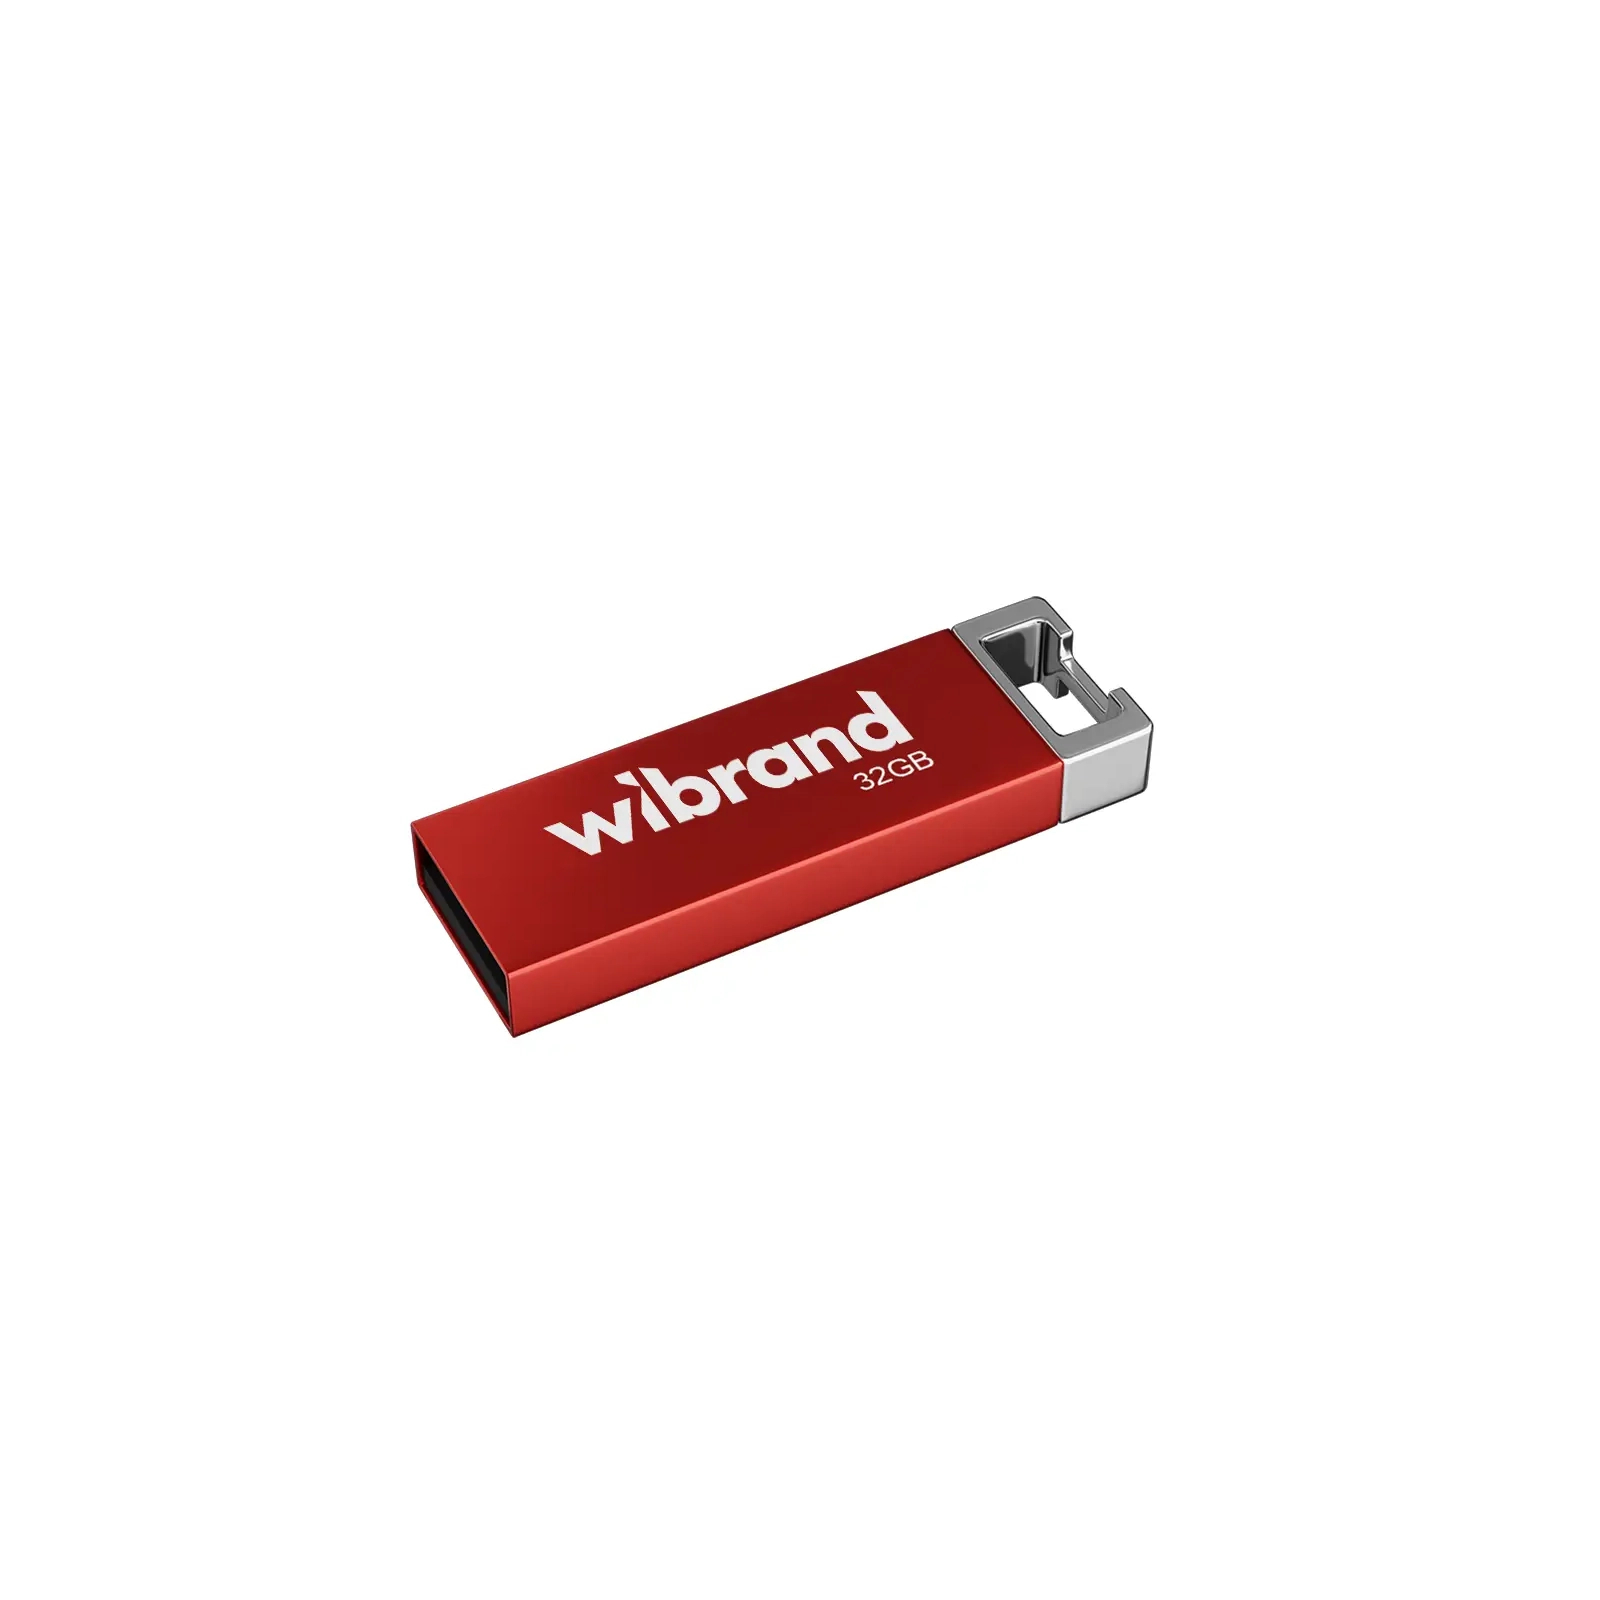 USB флеш накопитель Wibrand 8GB Chameleon Red USB 2.0 (WI2.0/CH8U6R)